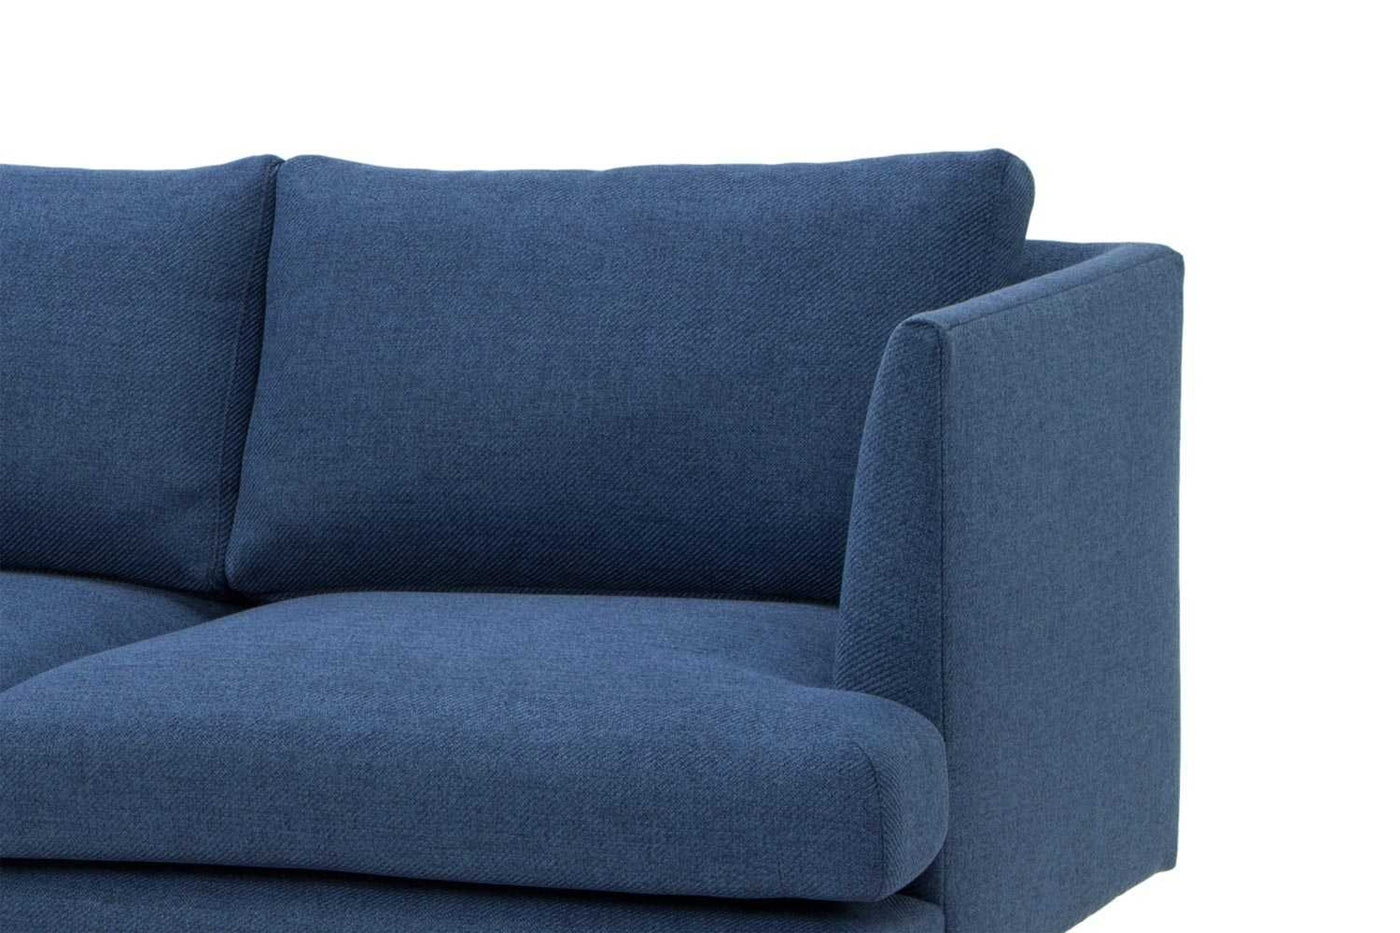 3 Seater Fabric Sofa - Navy